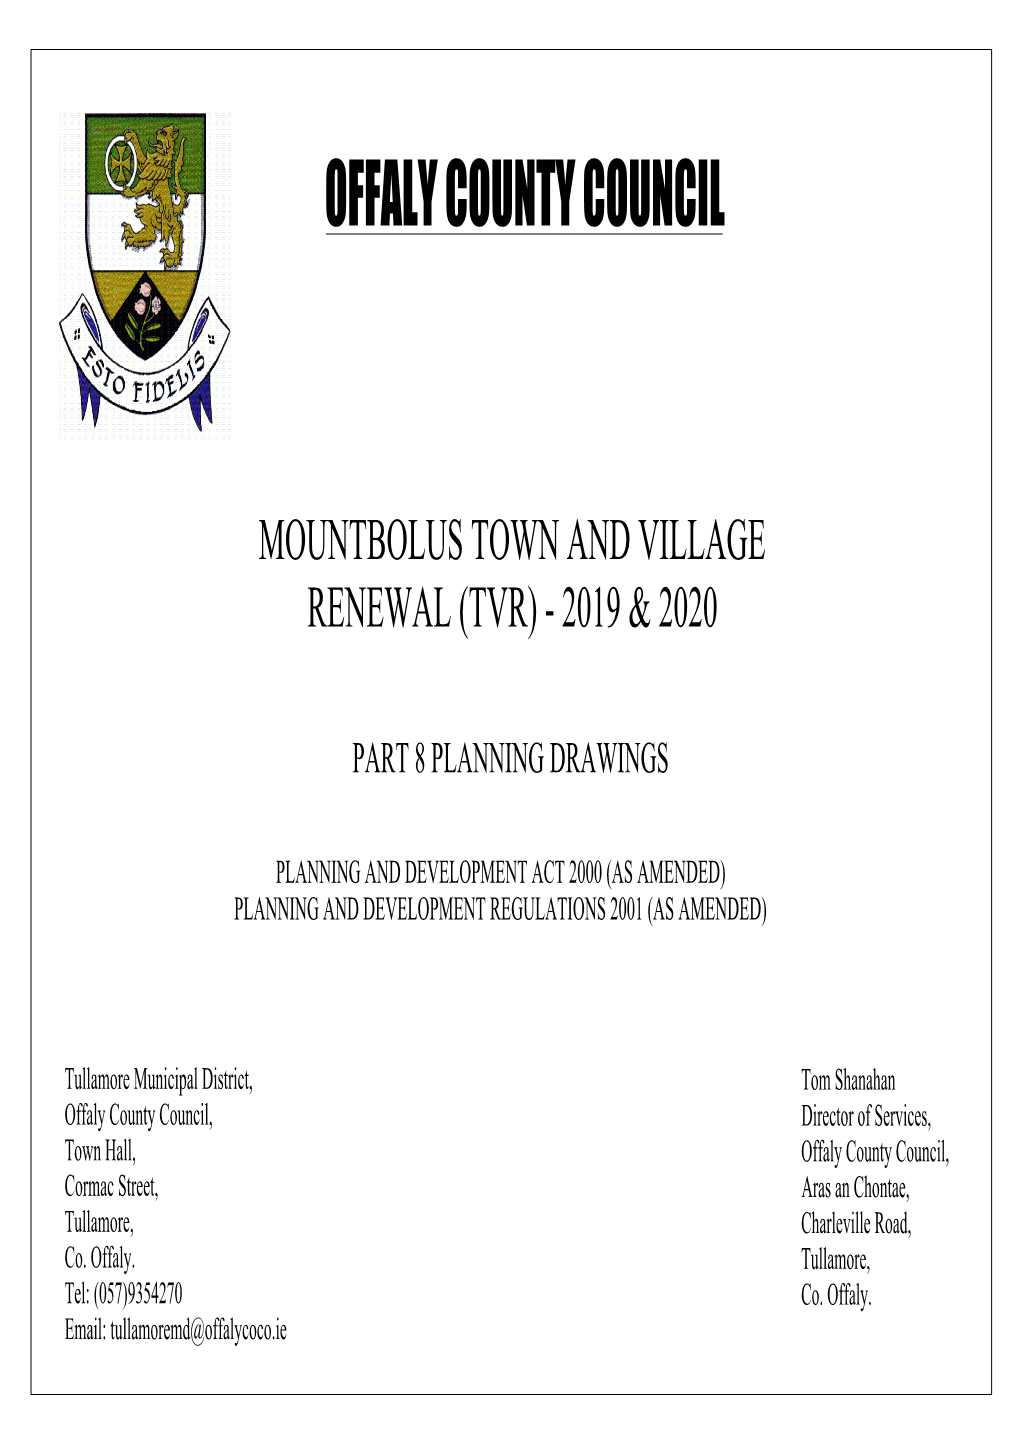 Mountbolus Town and Village Renewal (Tvr) - 2019 & 2020